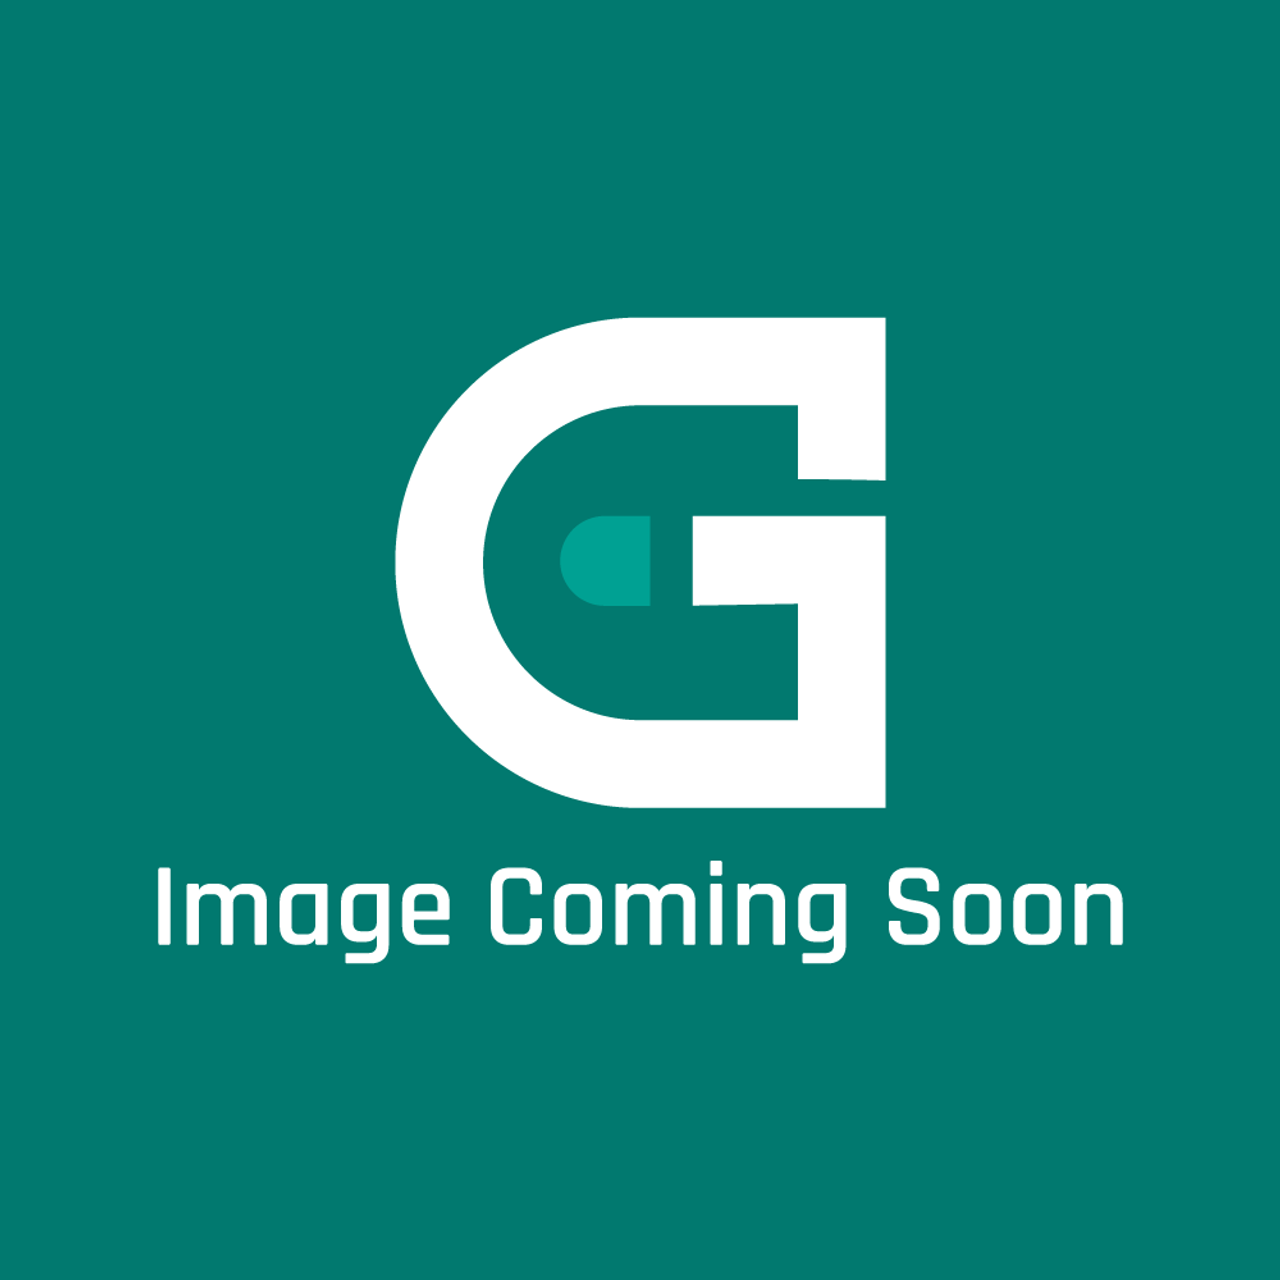 GE Appliances 23C13 - 107003-10 C0 Zp36K7E-Pfv R410A/230/1 - Image Coming Soon!